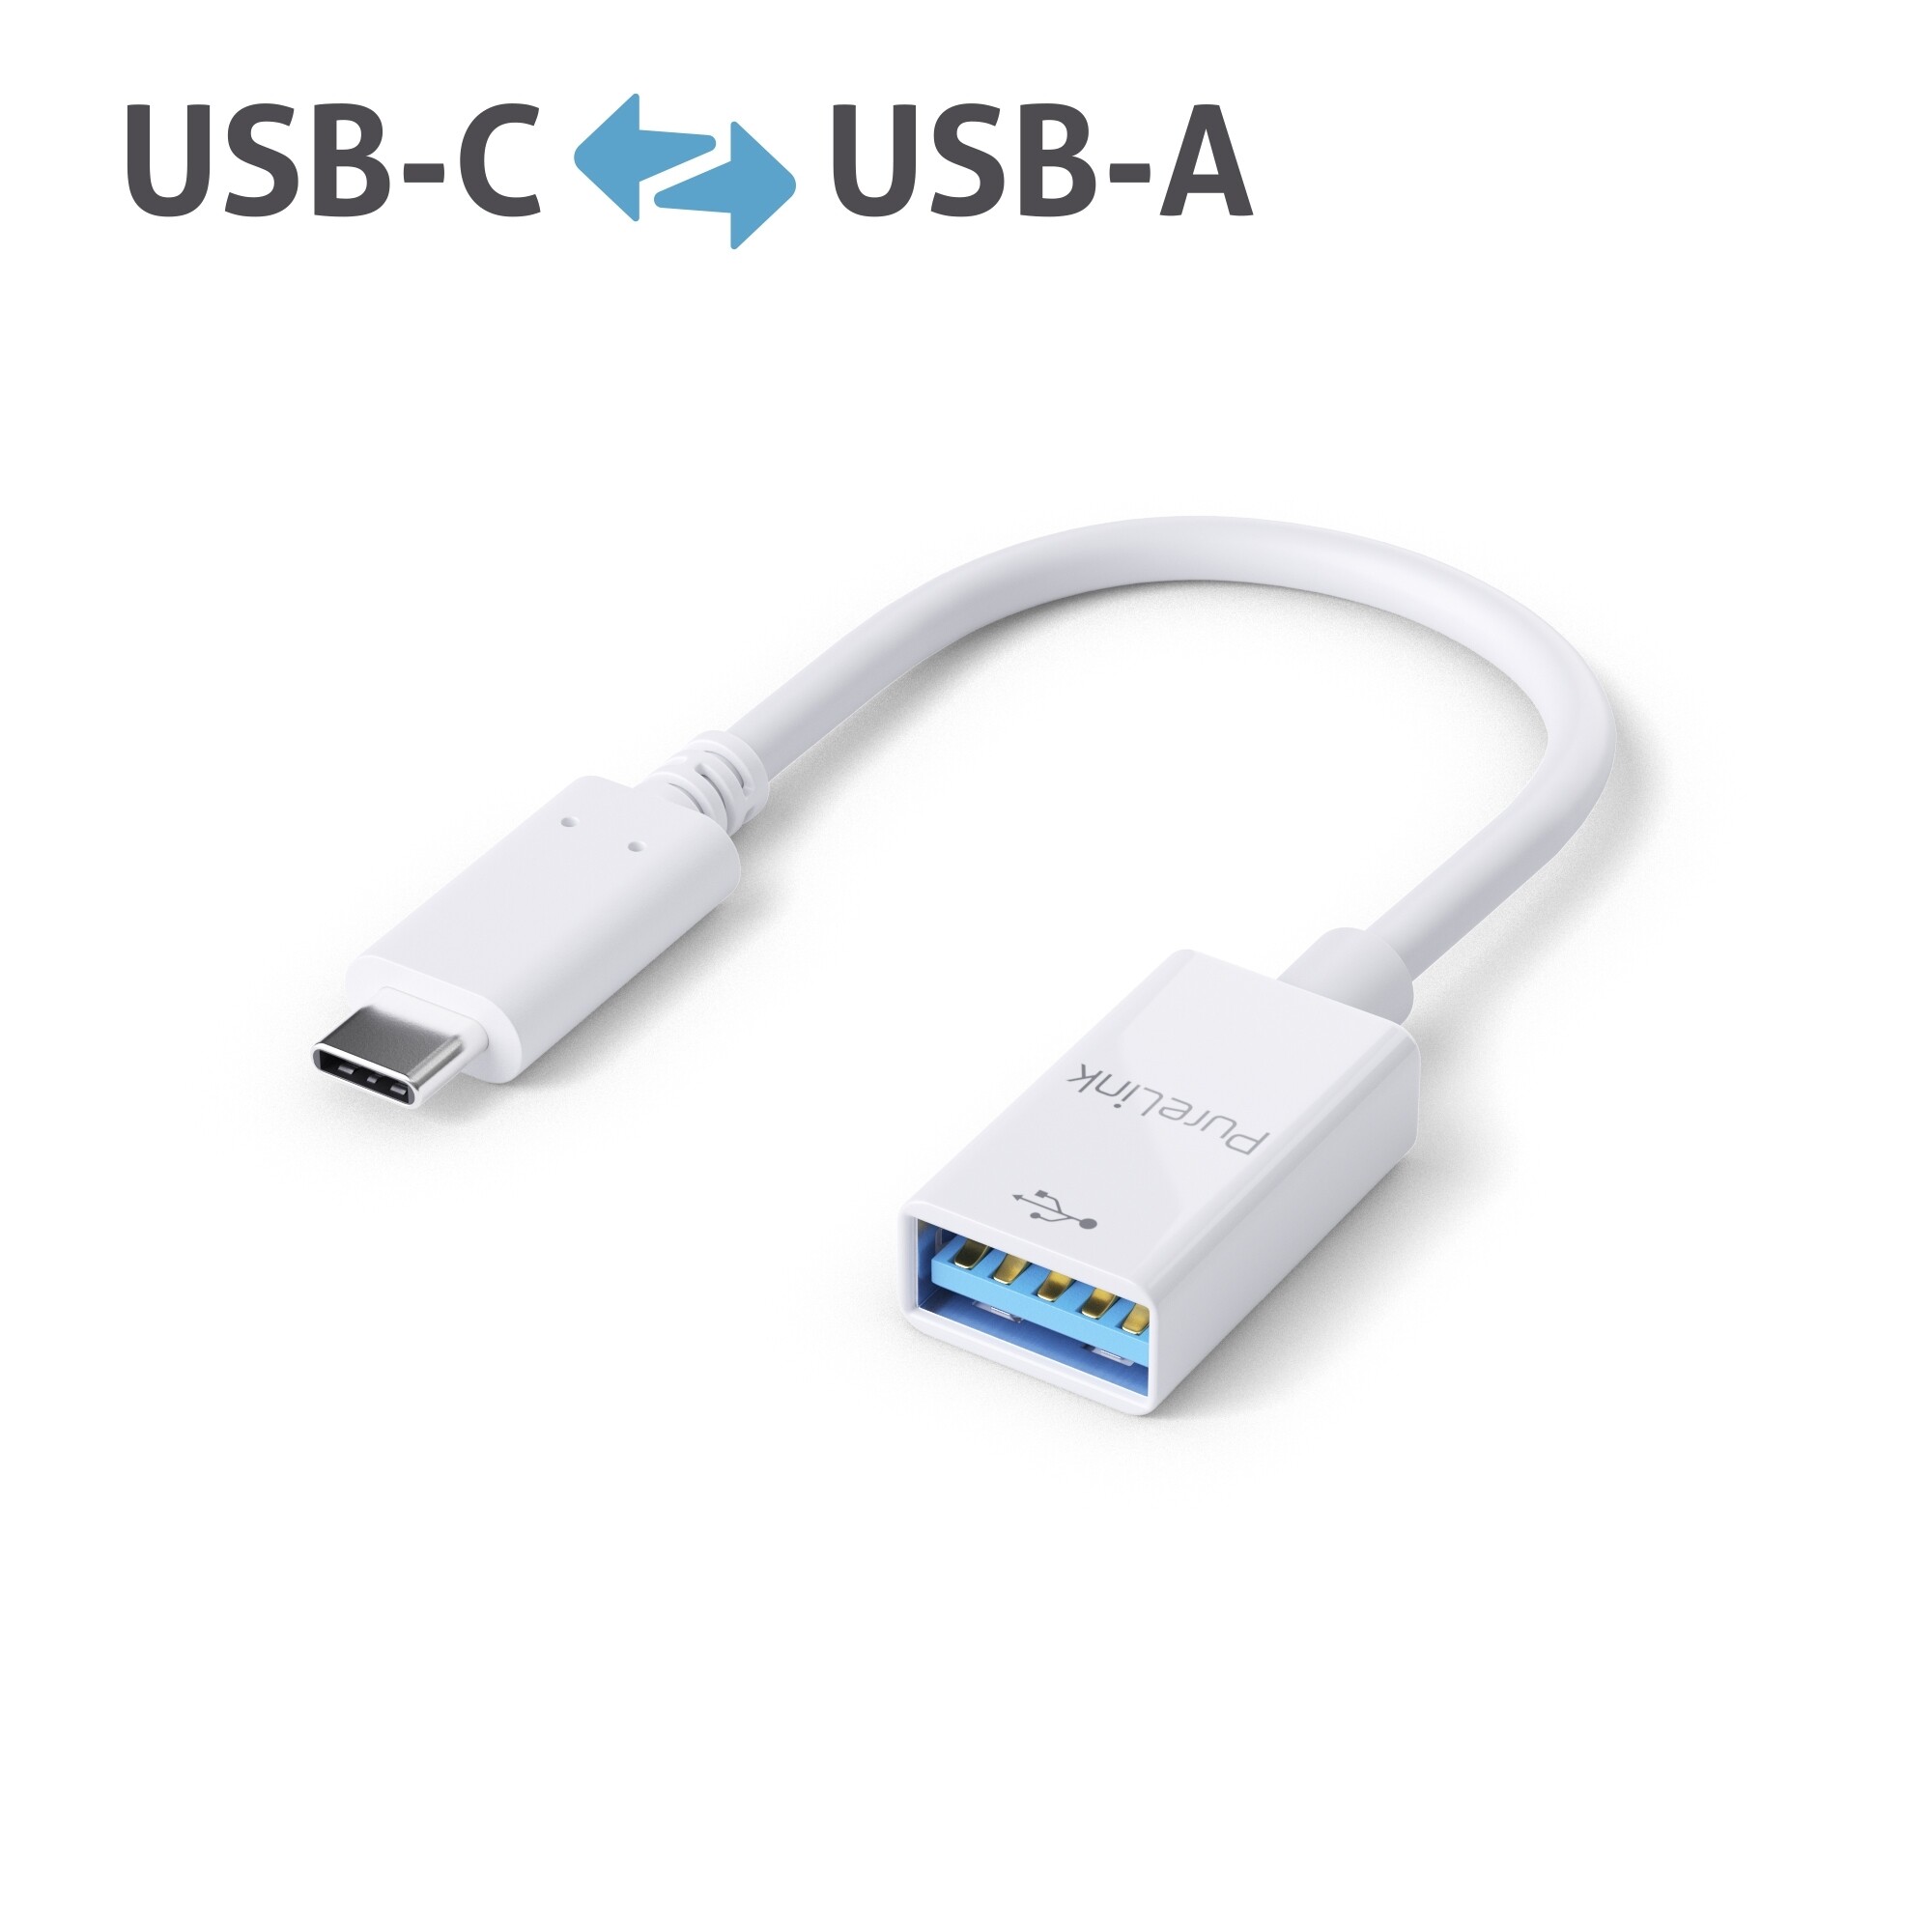 PURELINK iSeries - USB-Adapter - USB-C (M) bis USB Typ A (W) - USB 3.1 OTG - 10 cm - USB Power Deliv